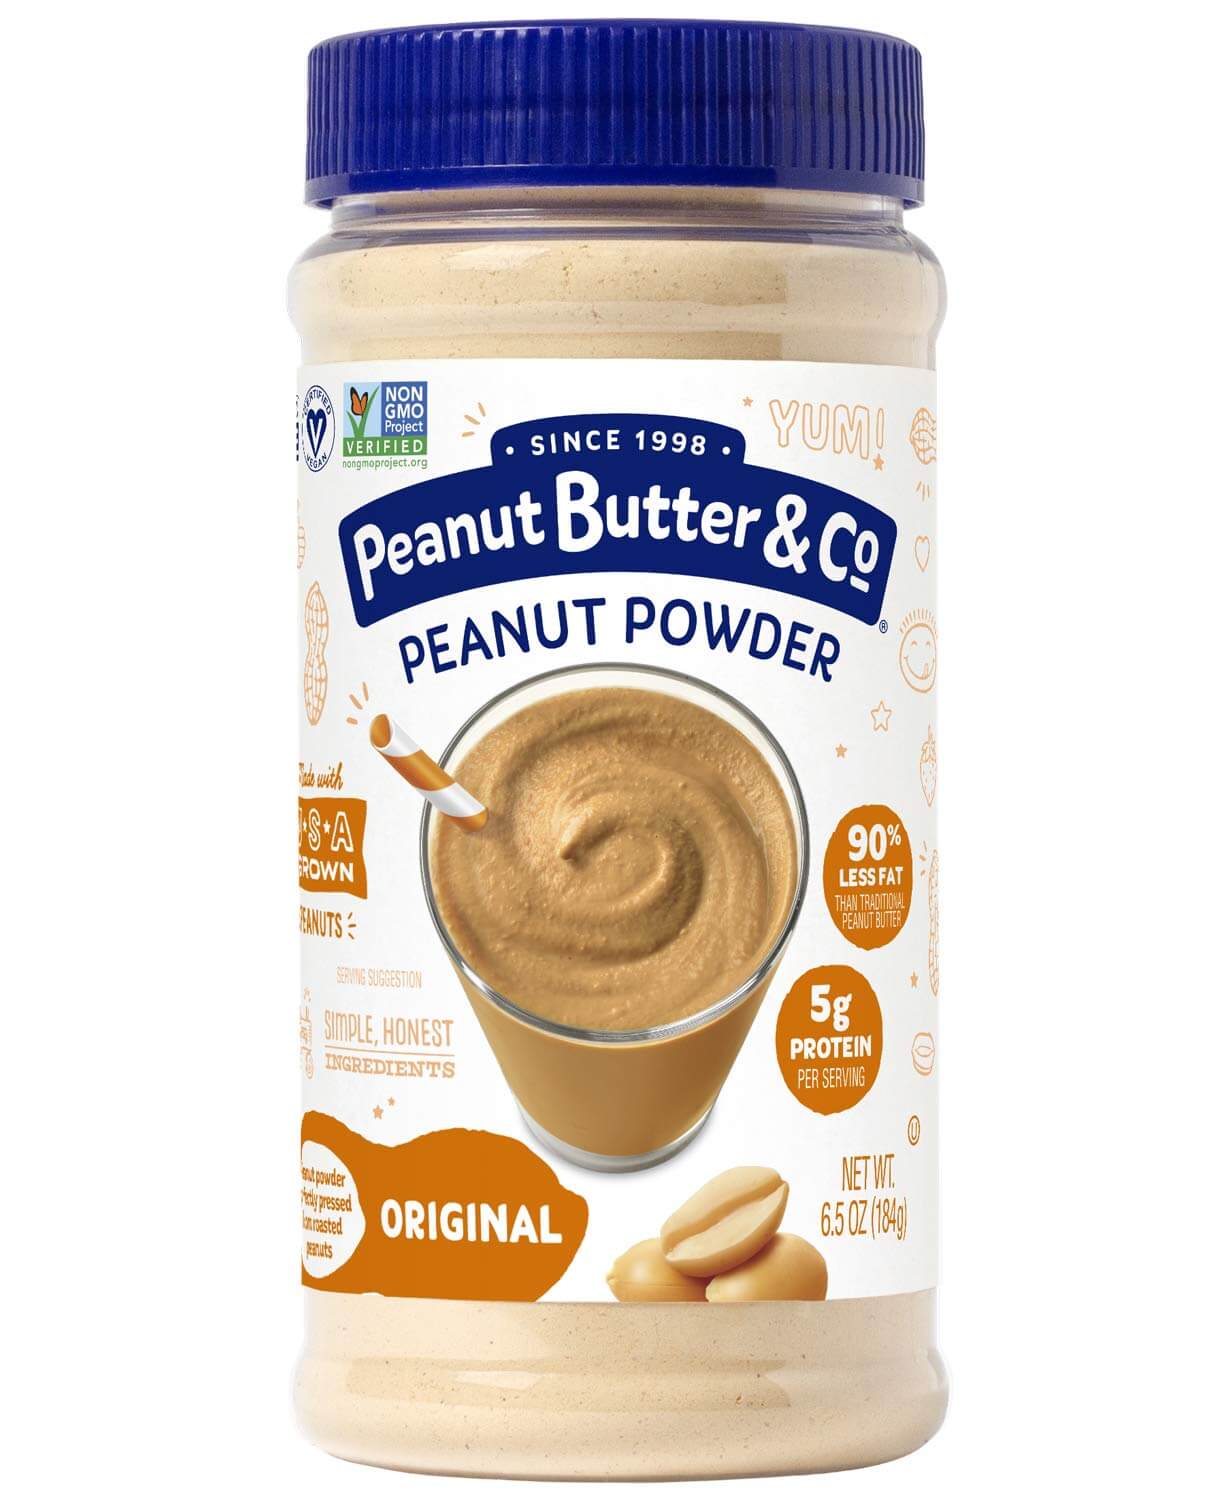 Peanut Butter & Co. Original Peanut Powder